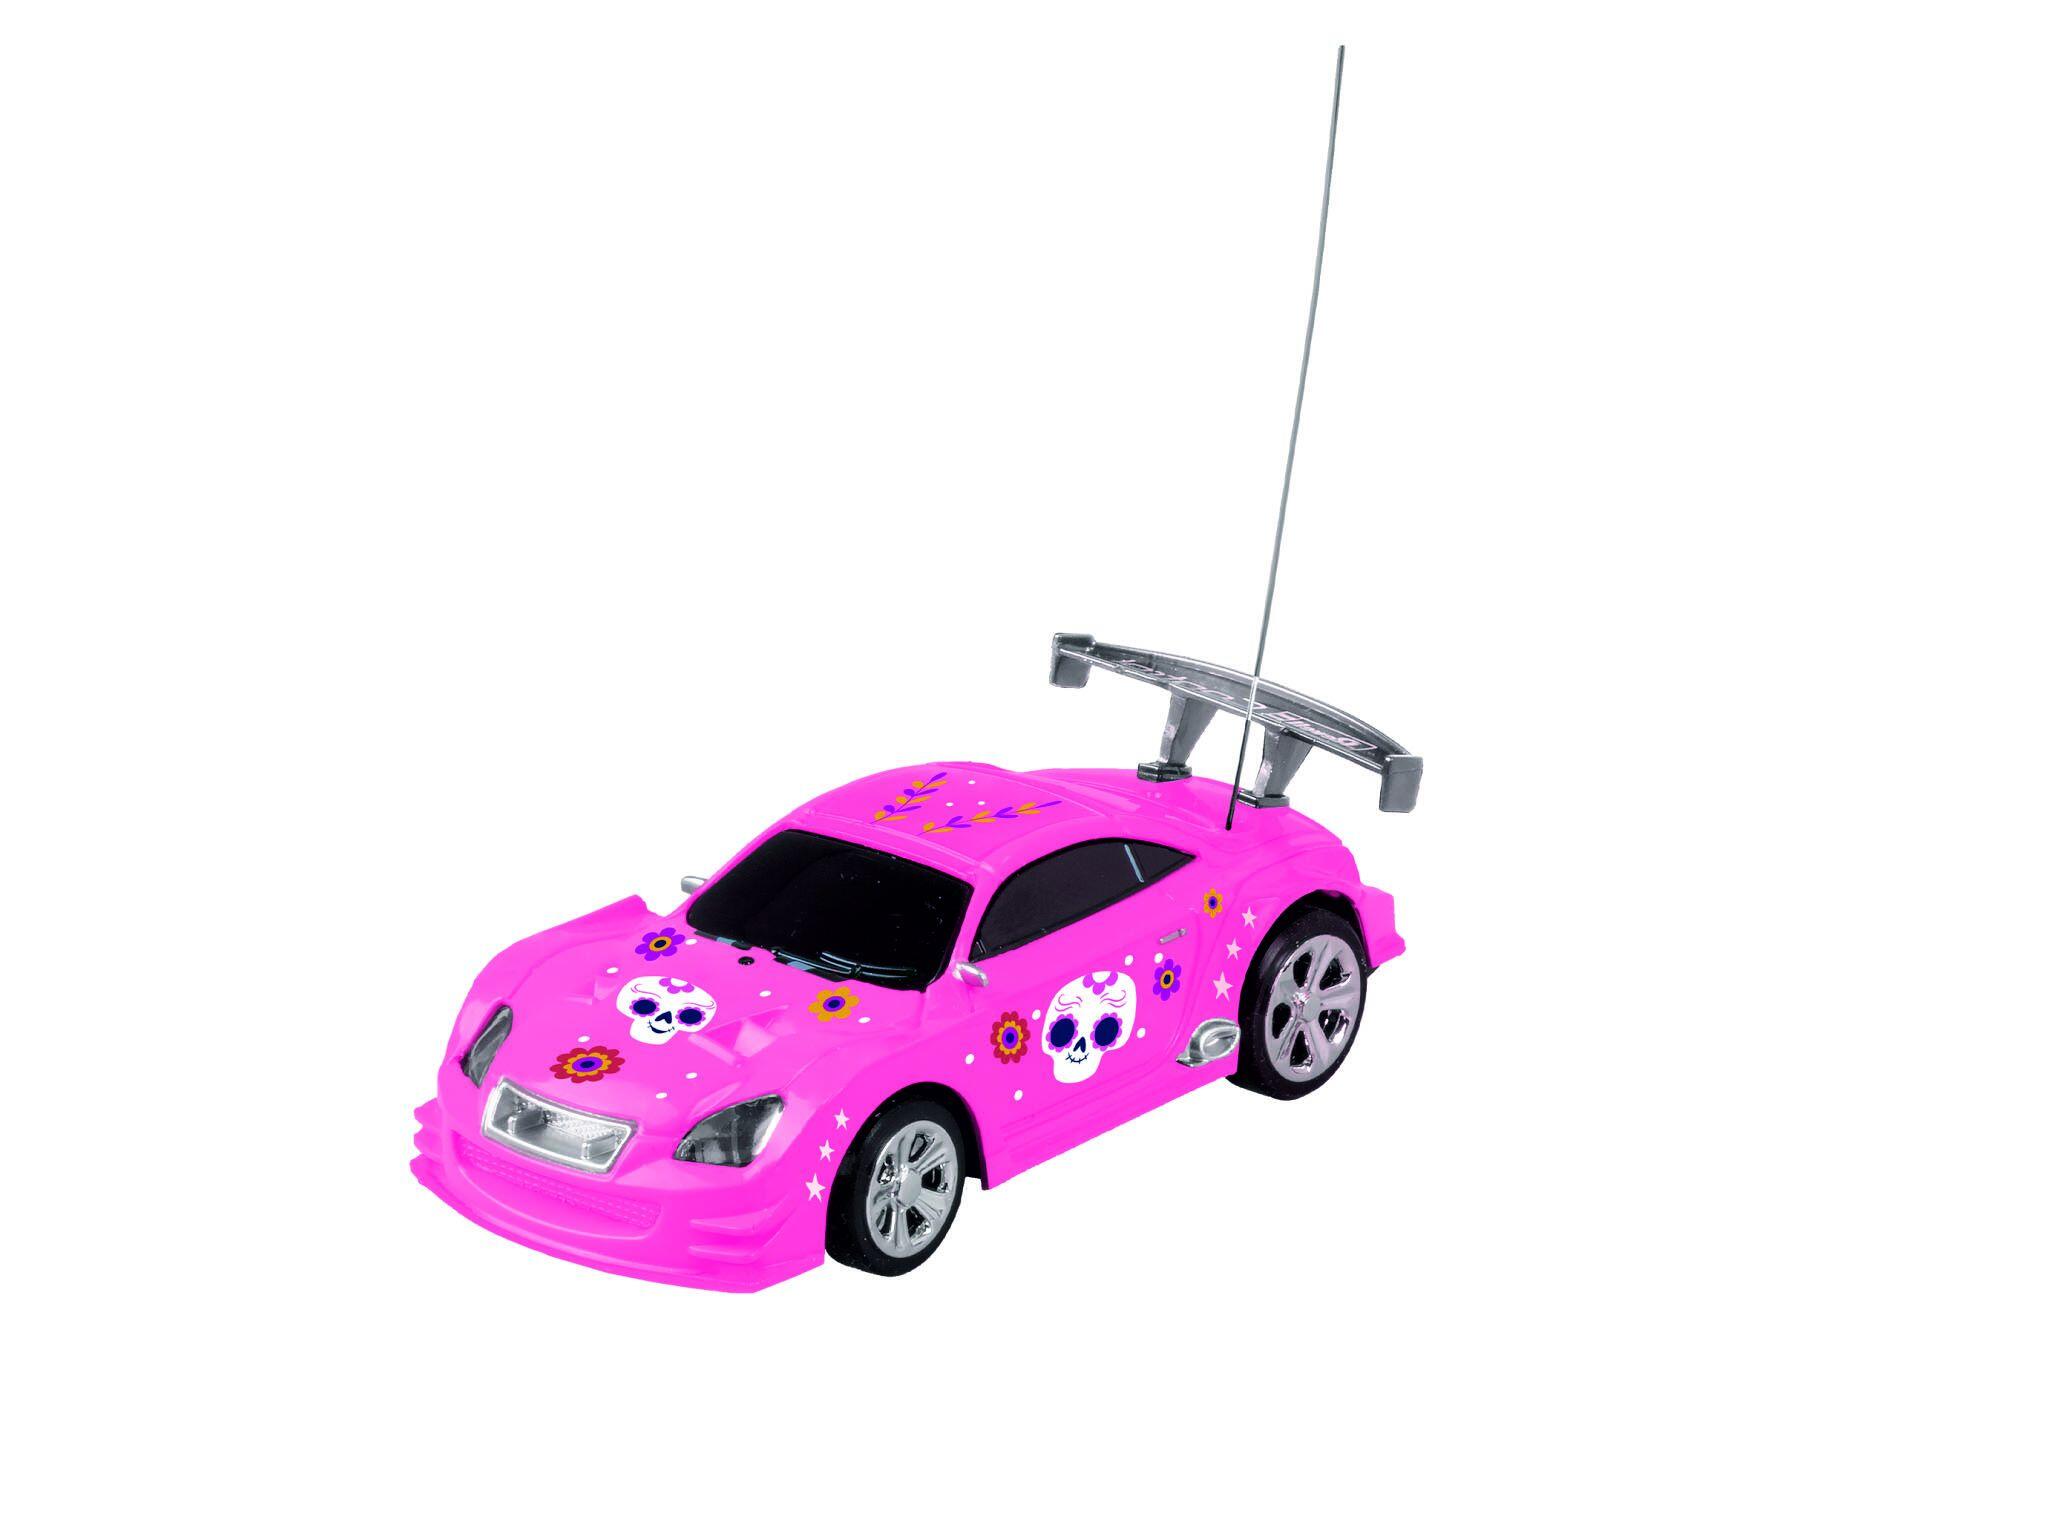 Mini RC Car "pink" - Mini RC Car pink